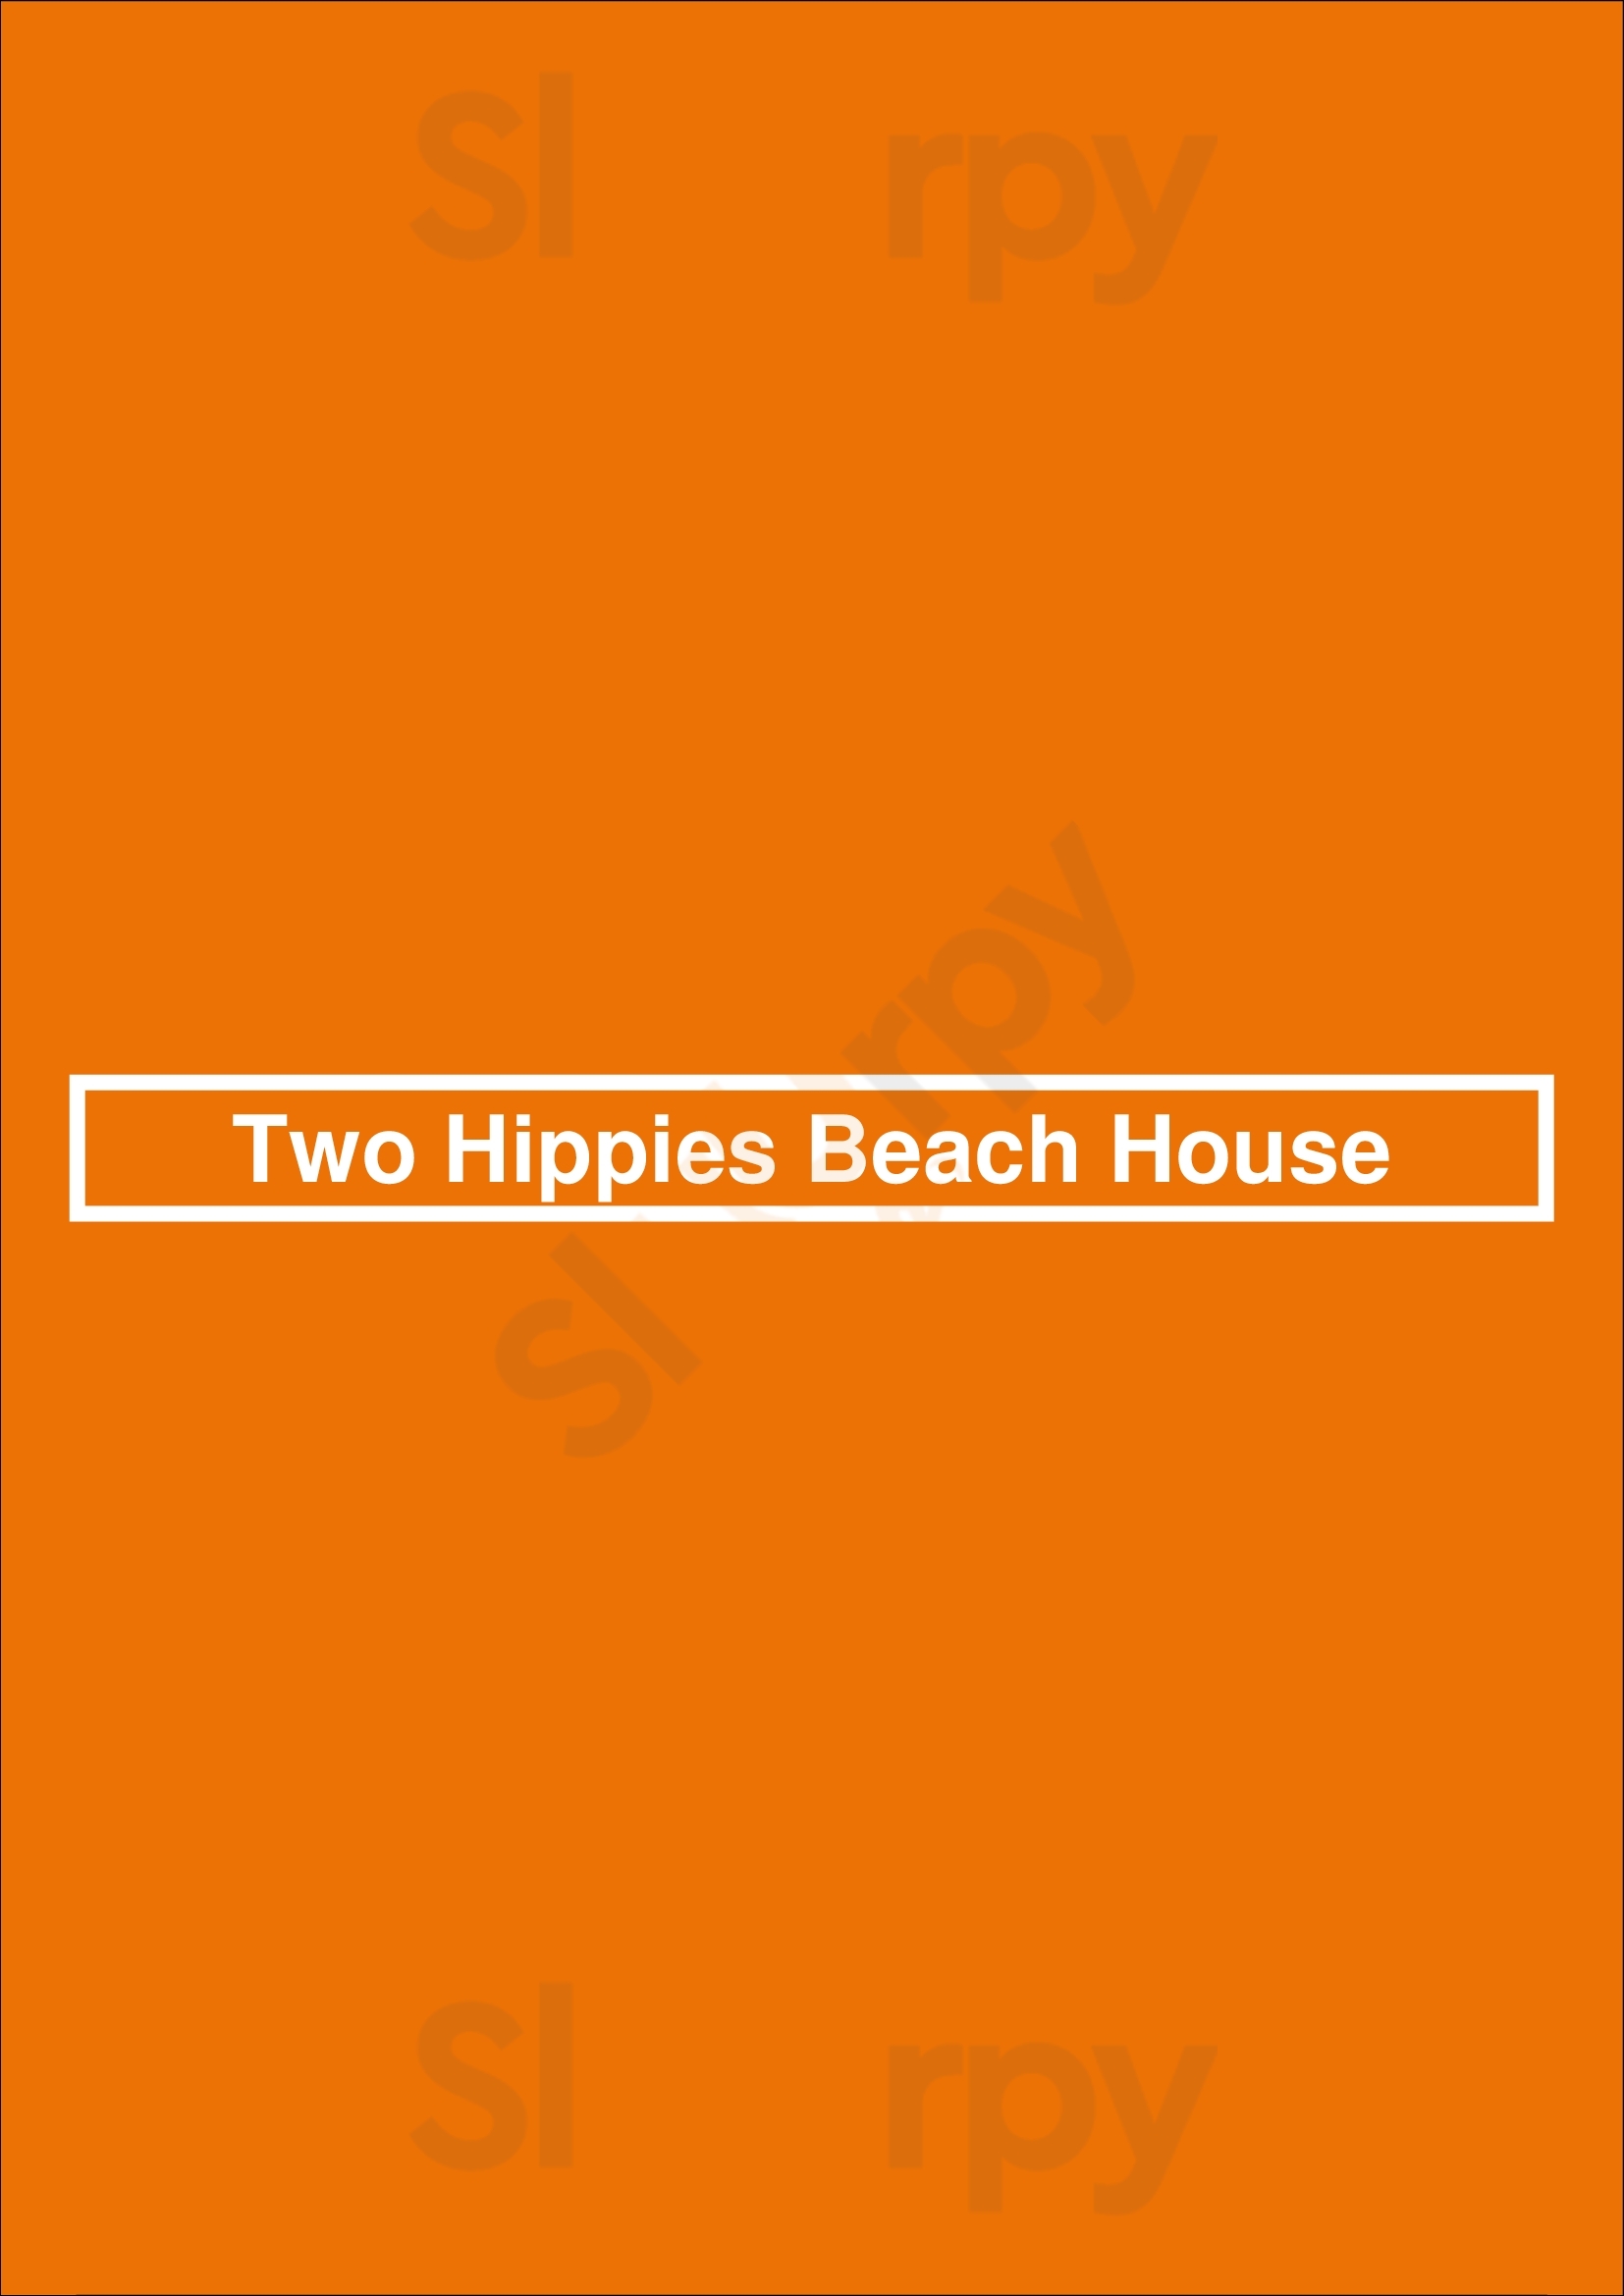 Two Hippies Beach House Phoenix Menu - 1